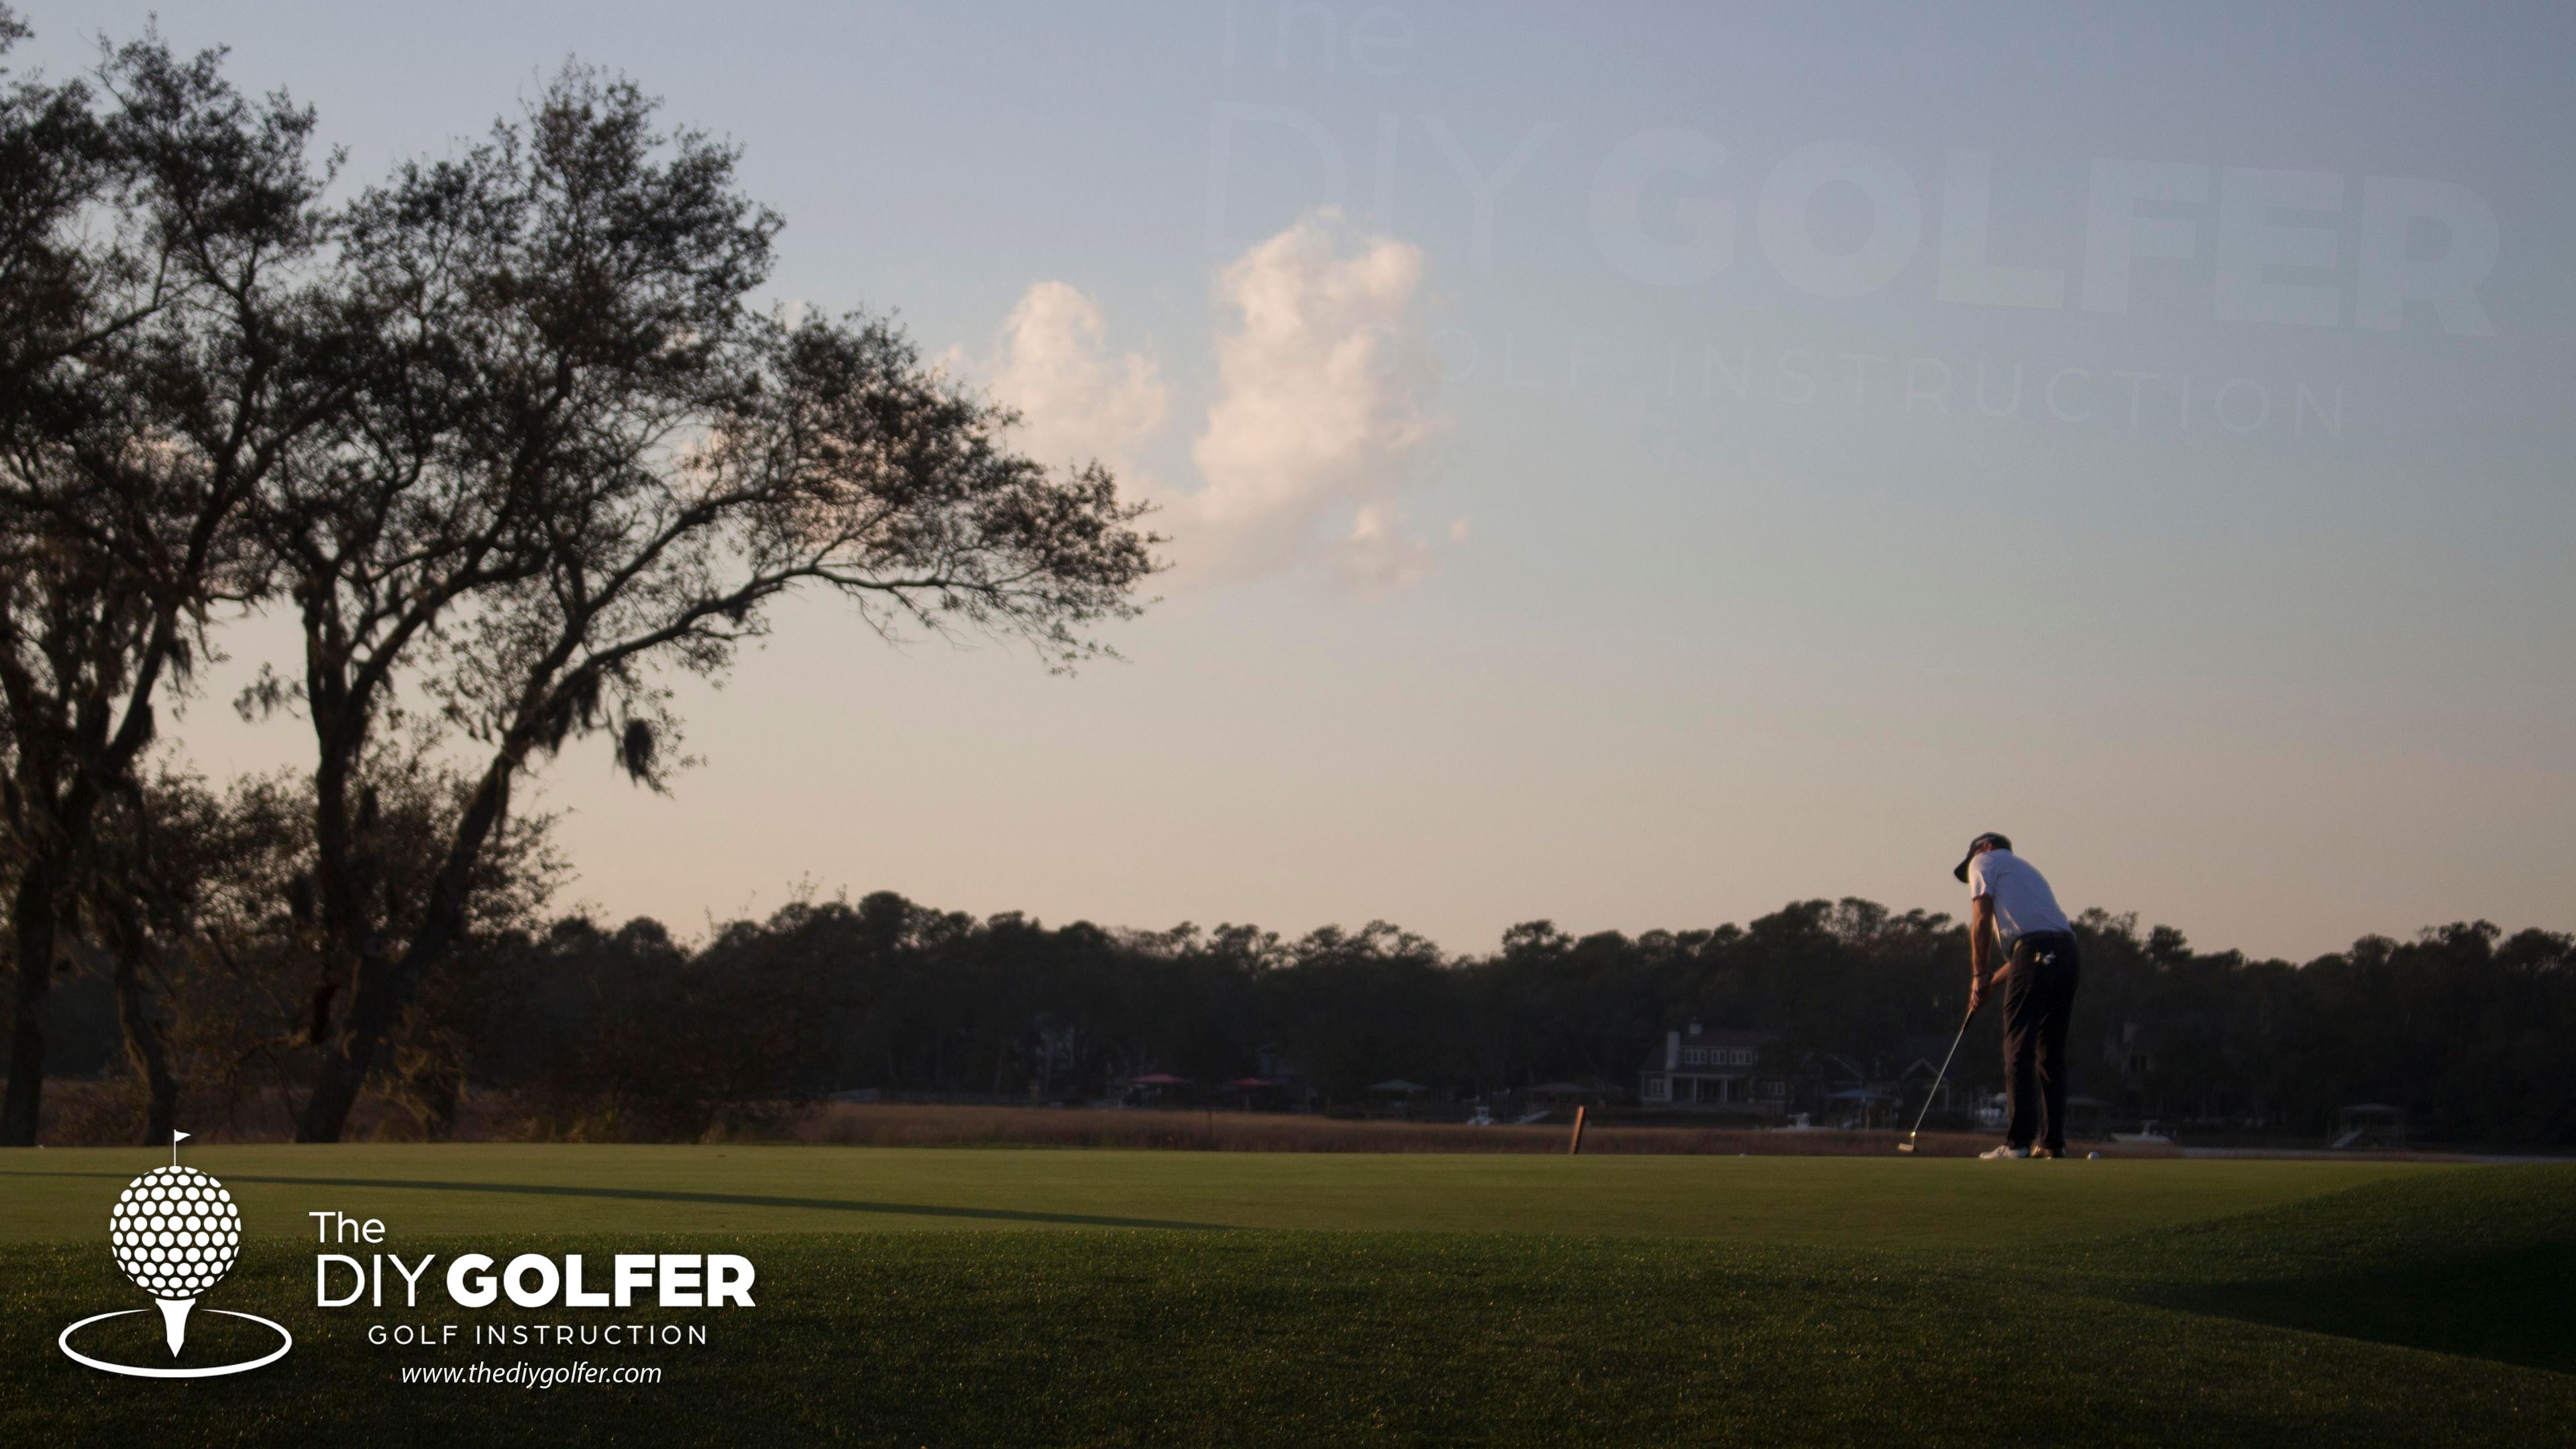 Golf Putting Photo: Striking Putt from Distance